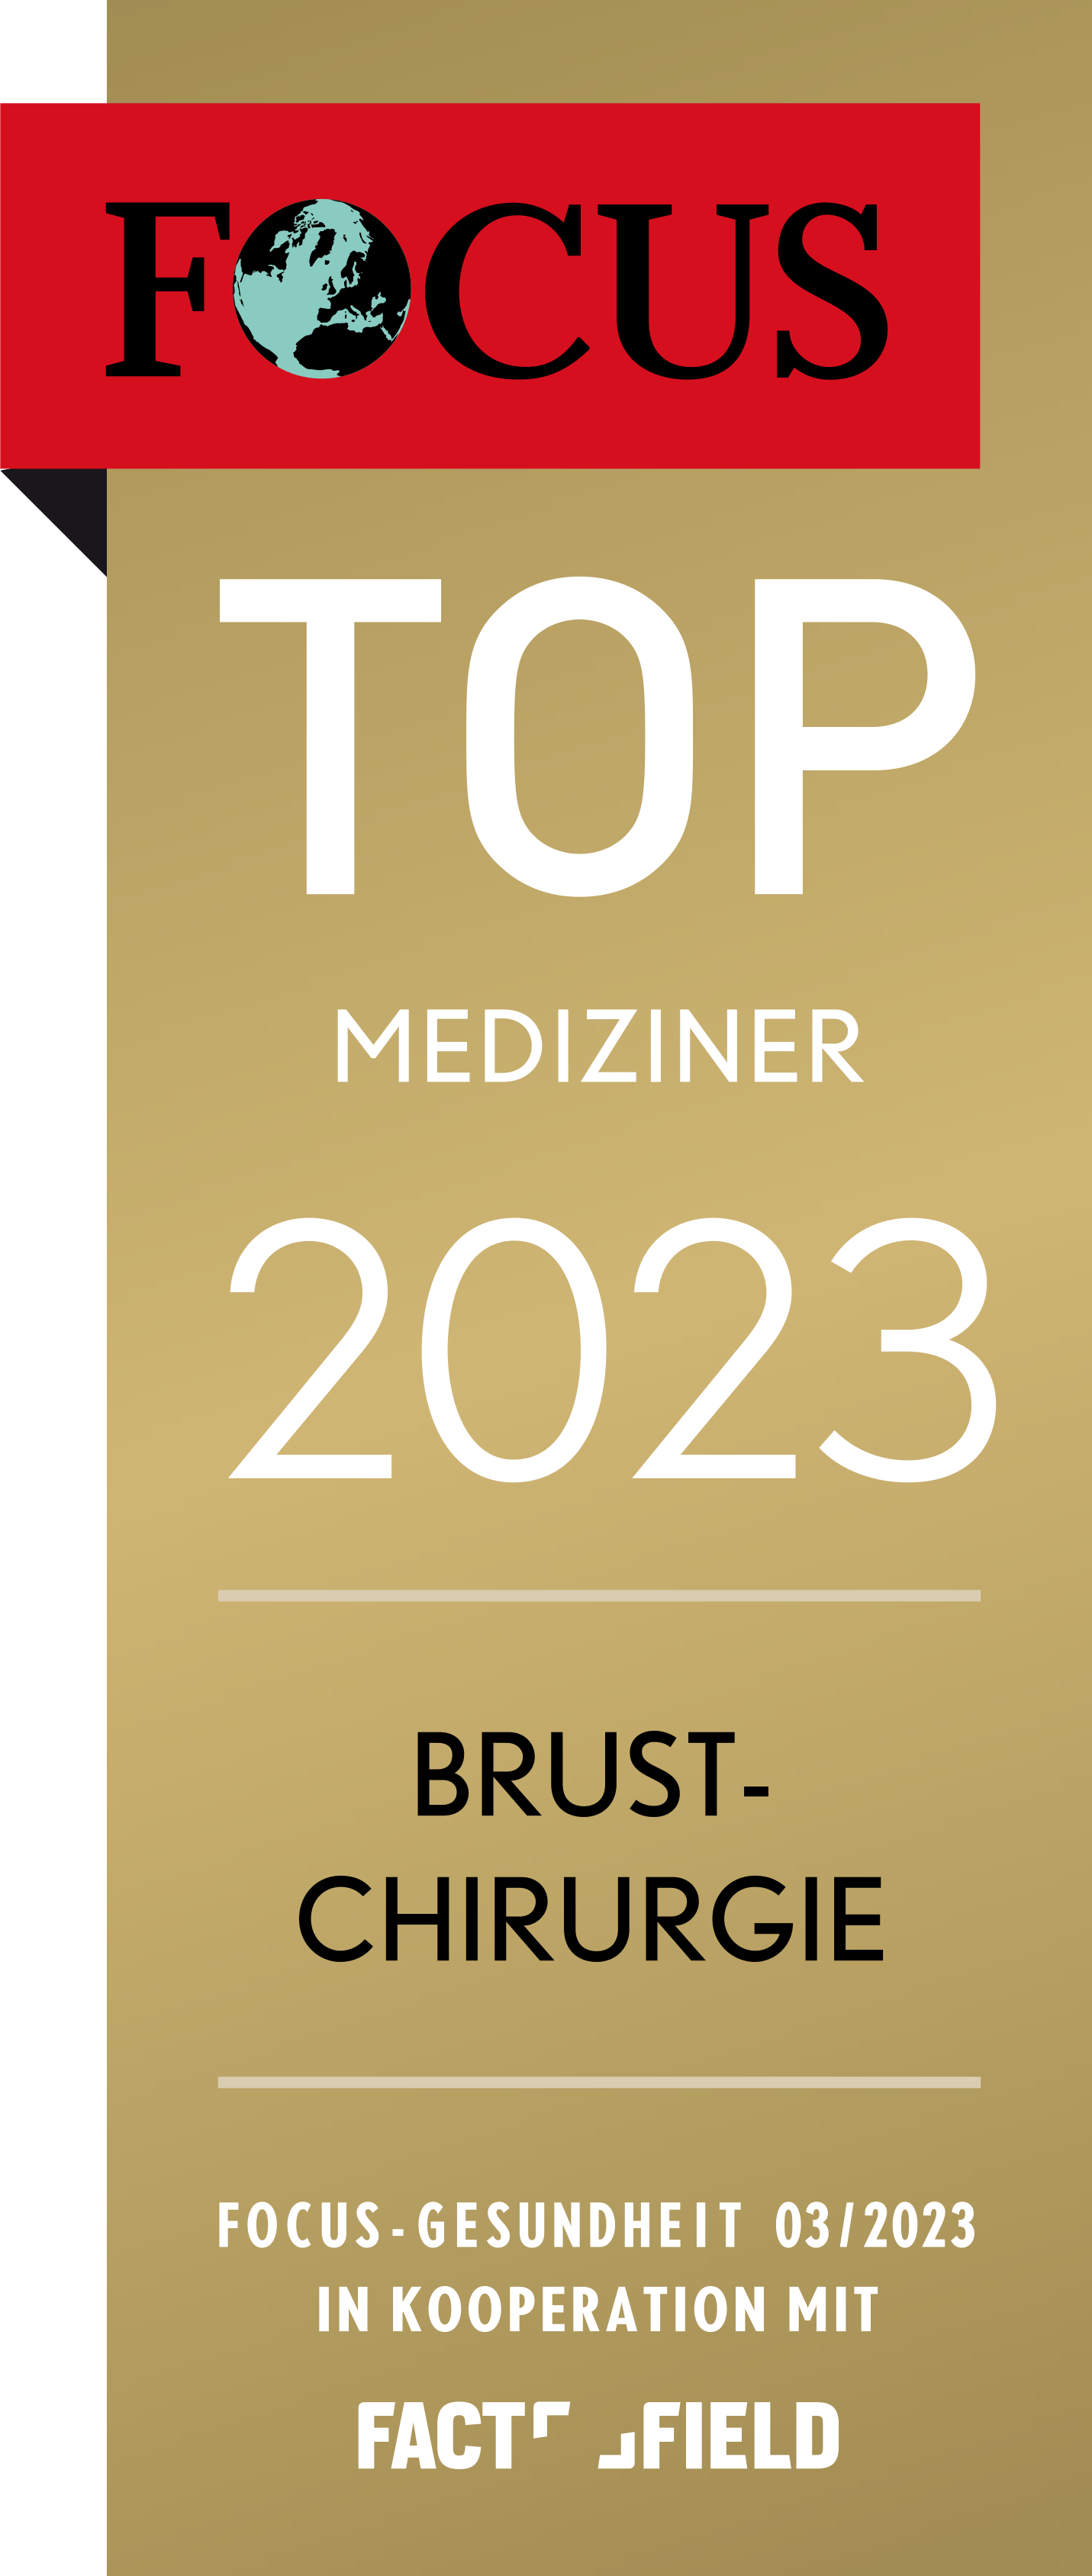 TOP Mediziner 2023 Brust Chirurgie